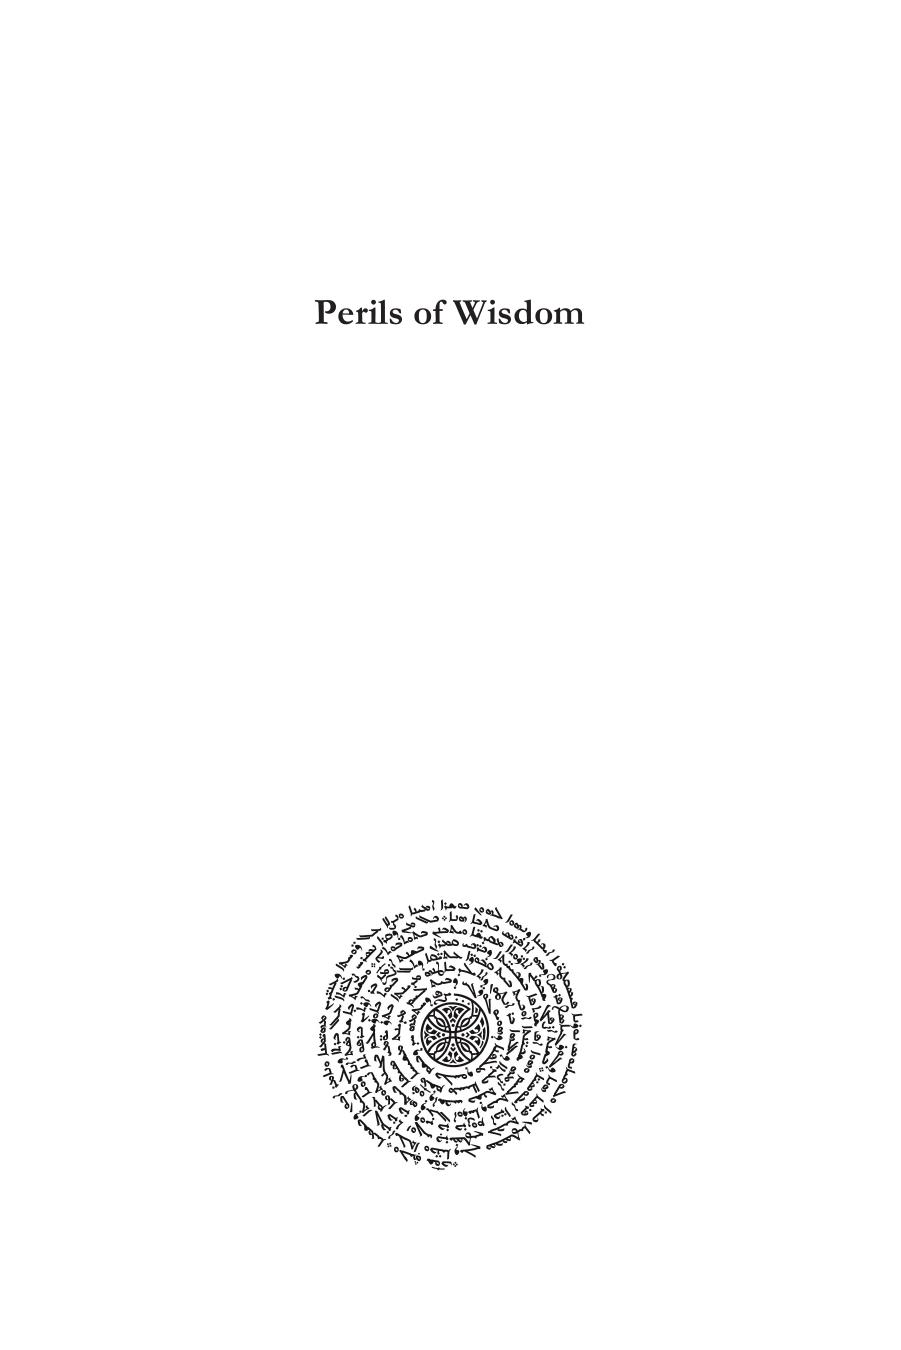 Perils of Wisdom: The Scriptural Solomon in Jewish Tradition by Sheila Keiter